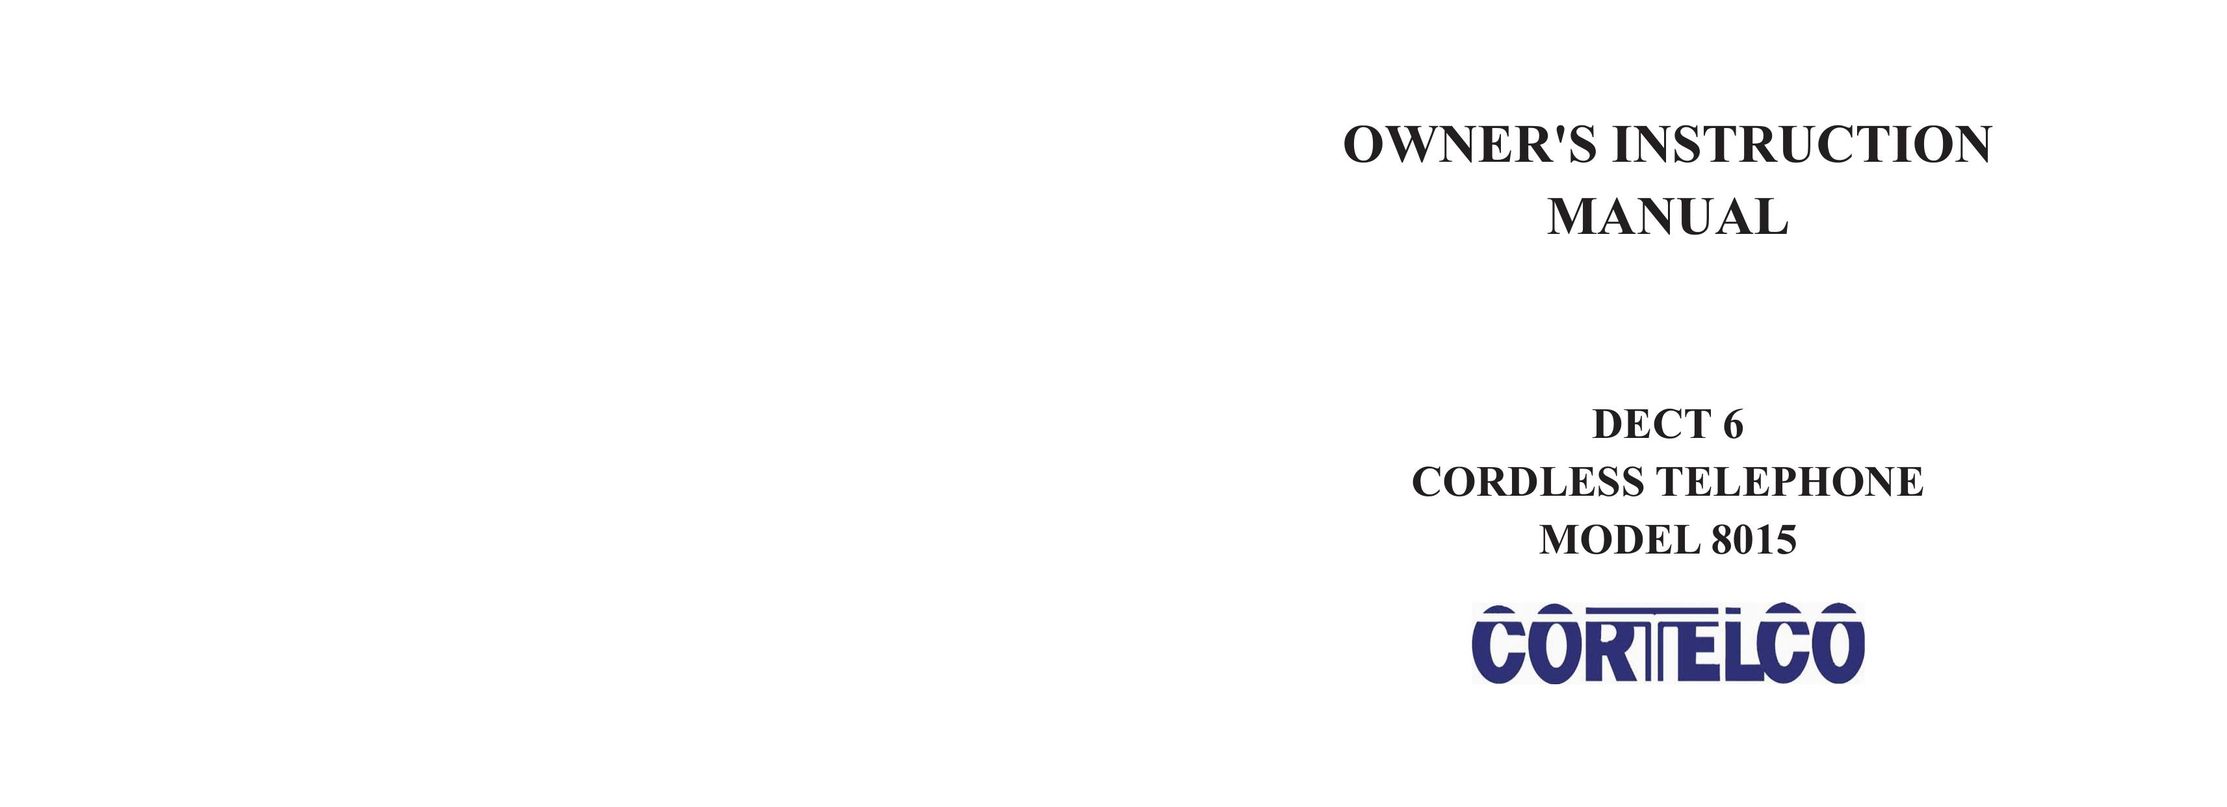 Cortelco 8015 Cordless Telephone User Manual